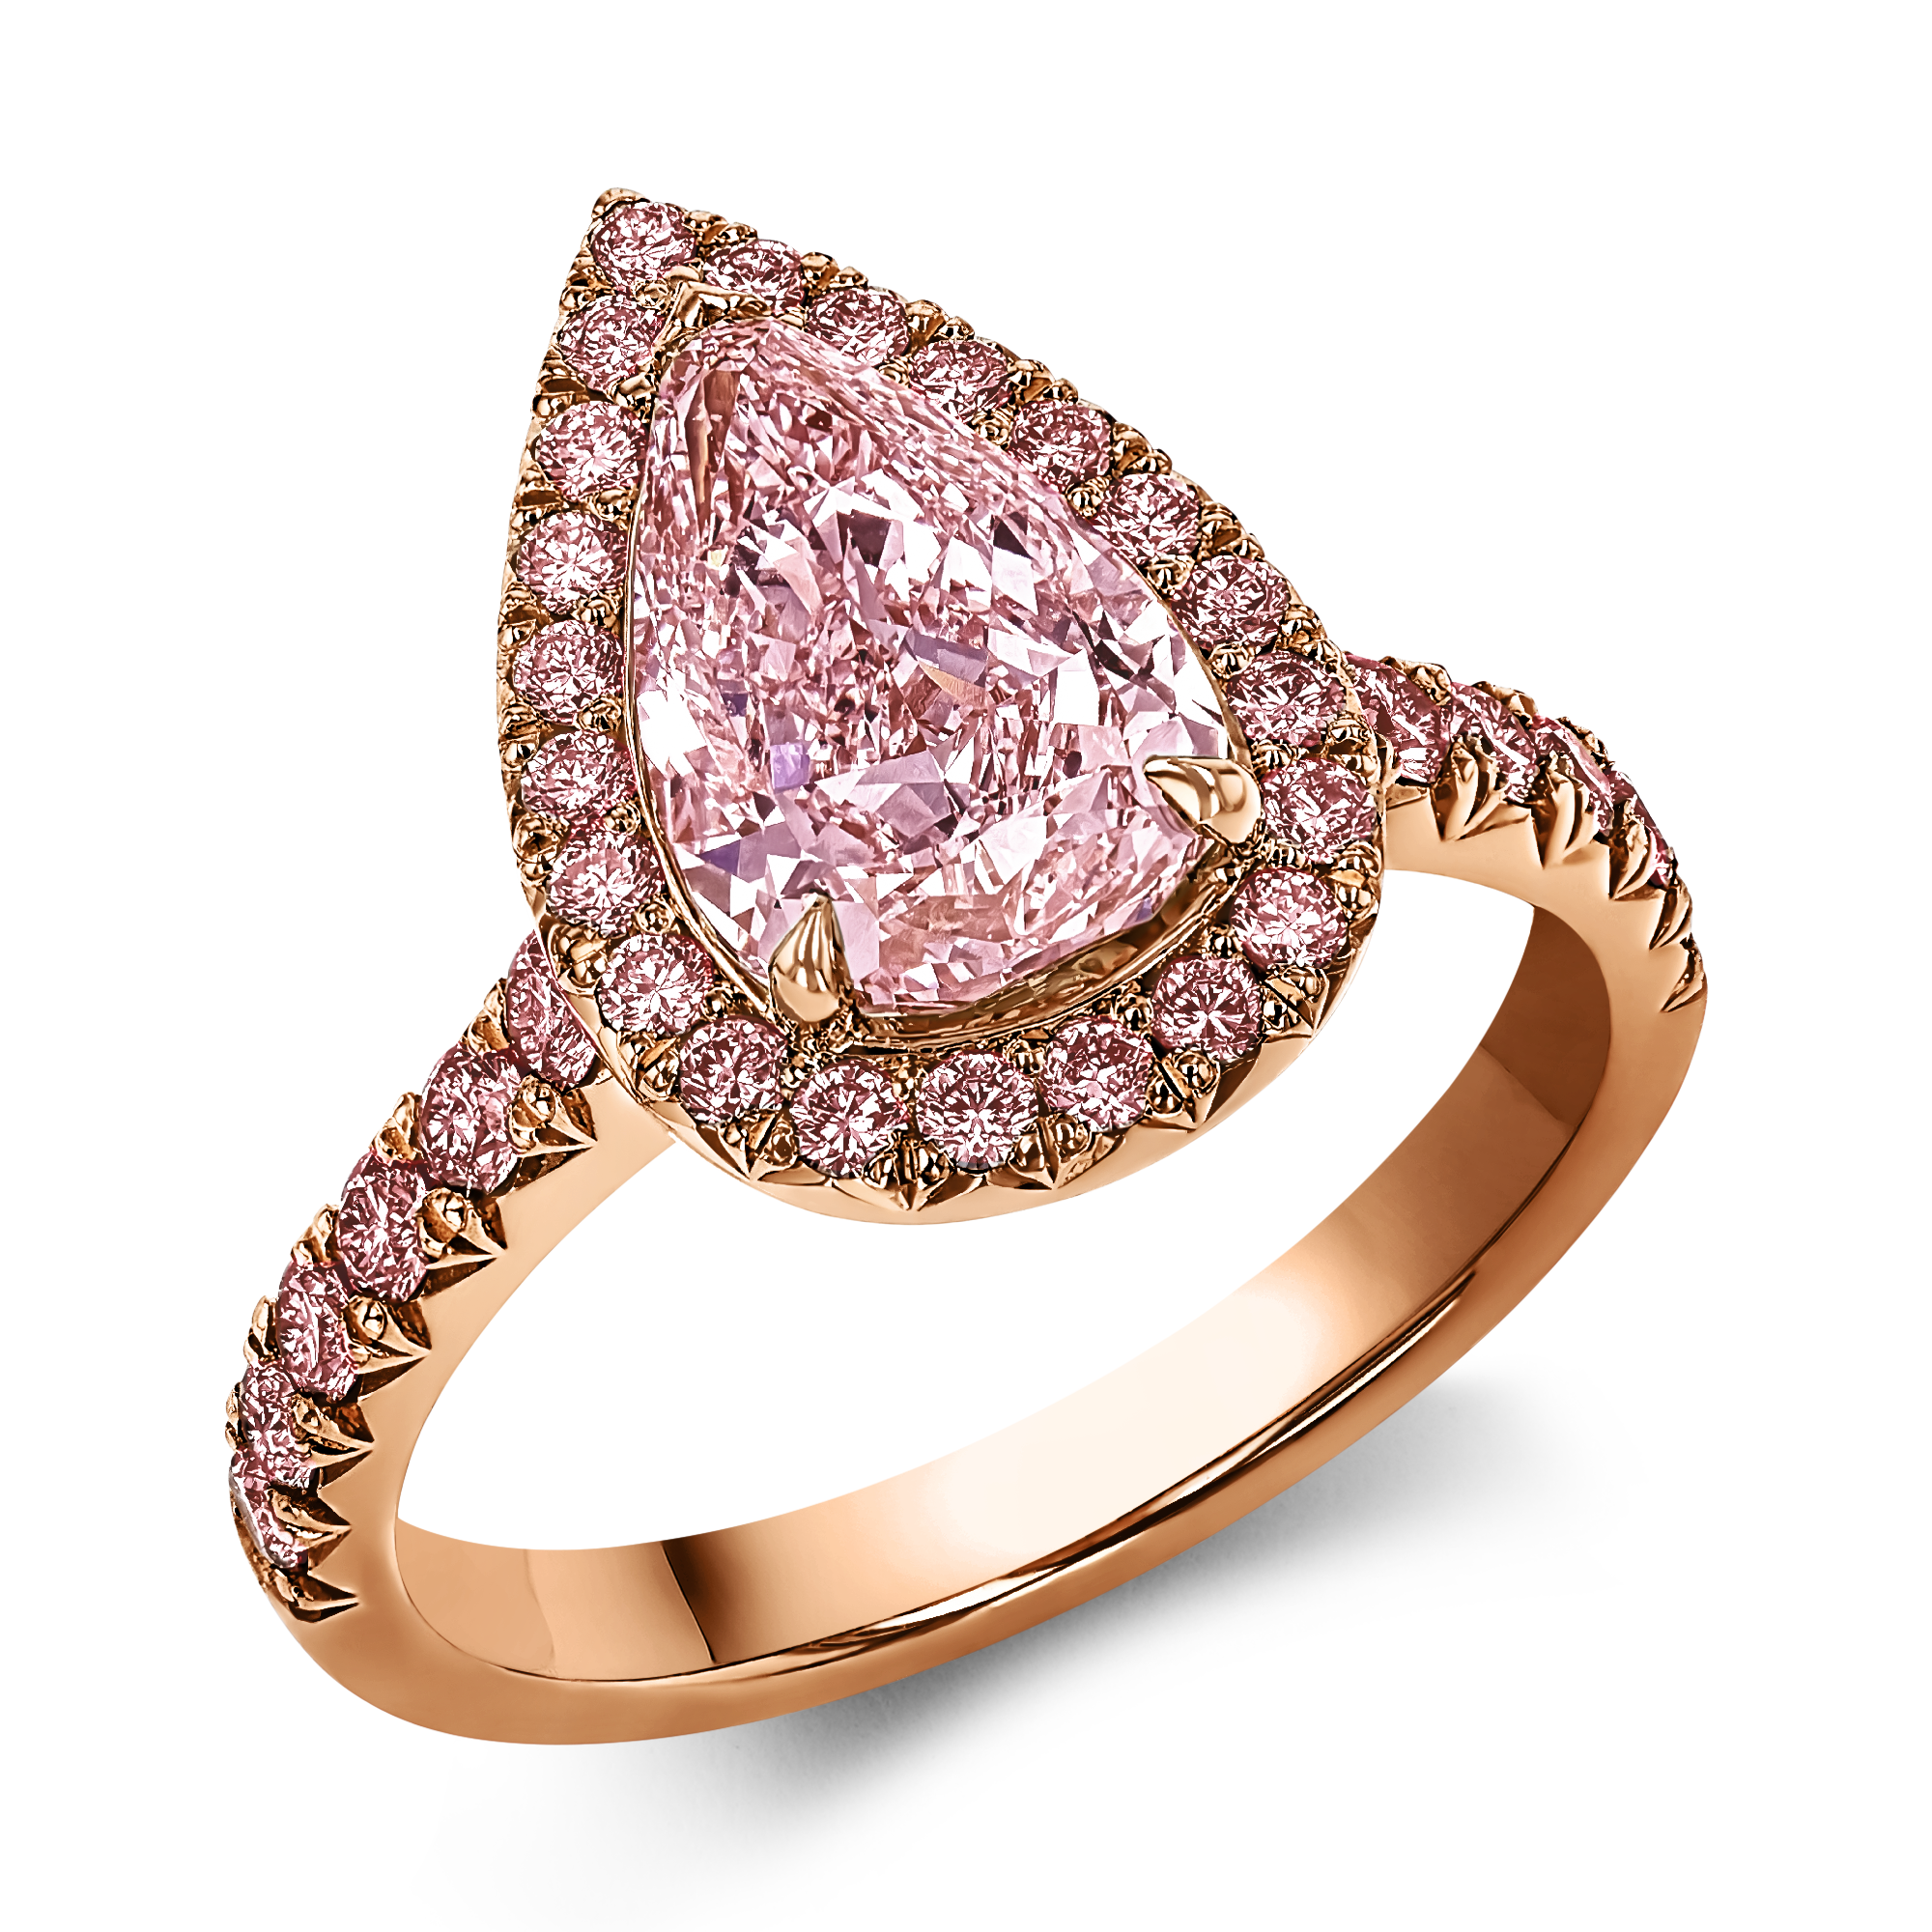 Fantastic Pear Cut Diamond Ring w/ Baguette Accents 2.52Ct L/VS2 GIA